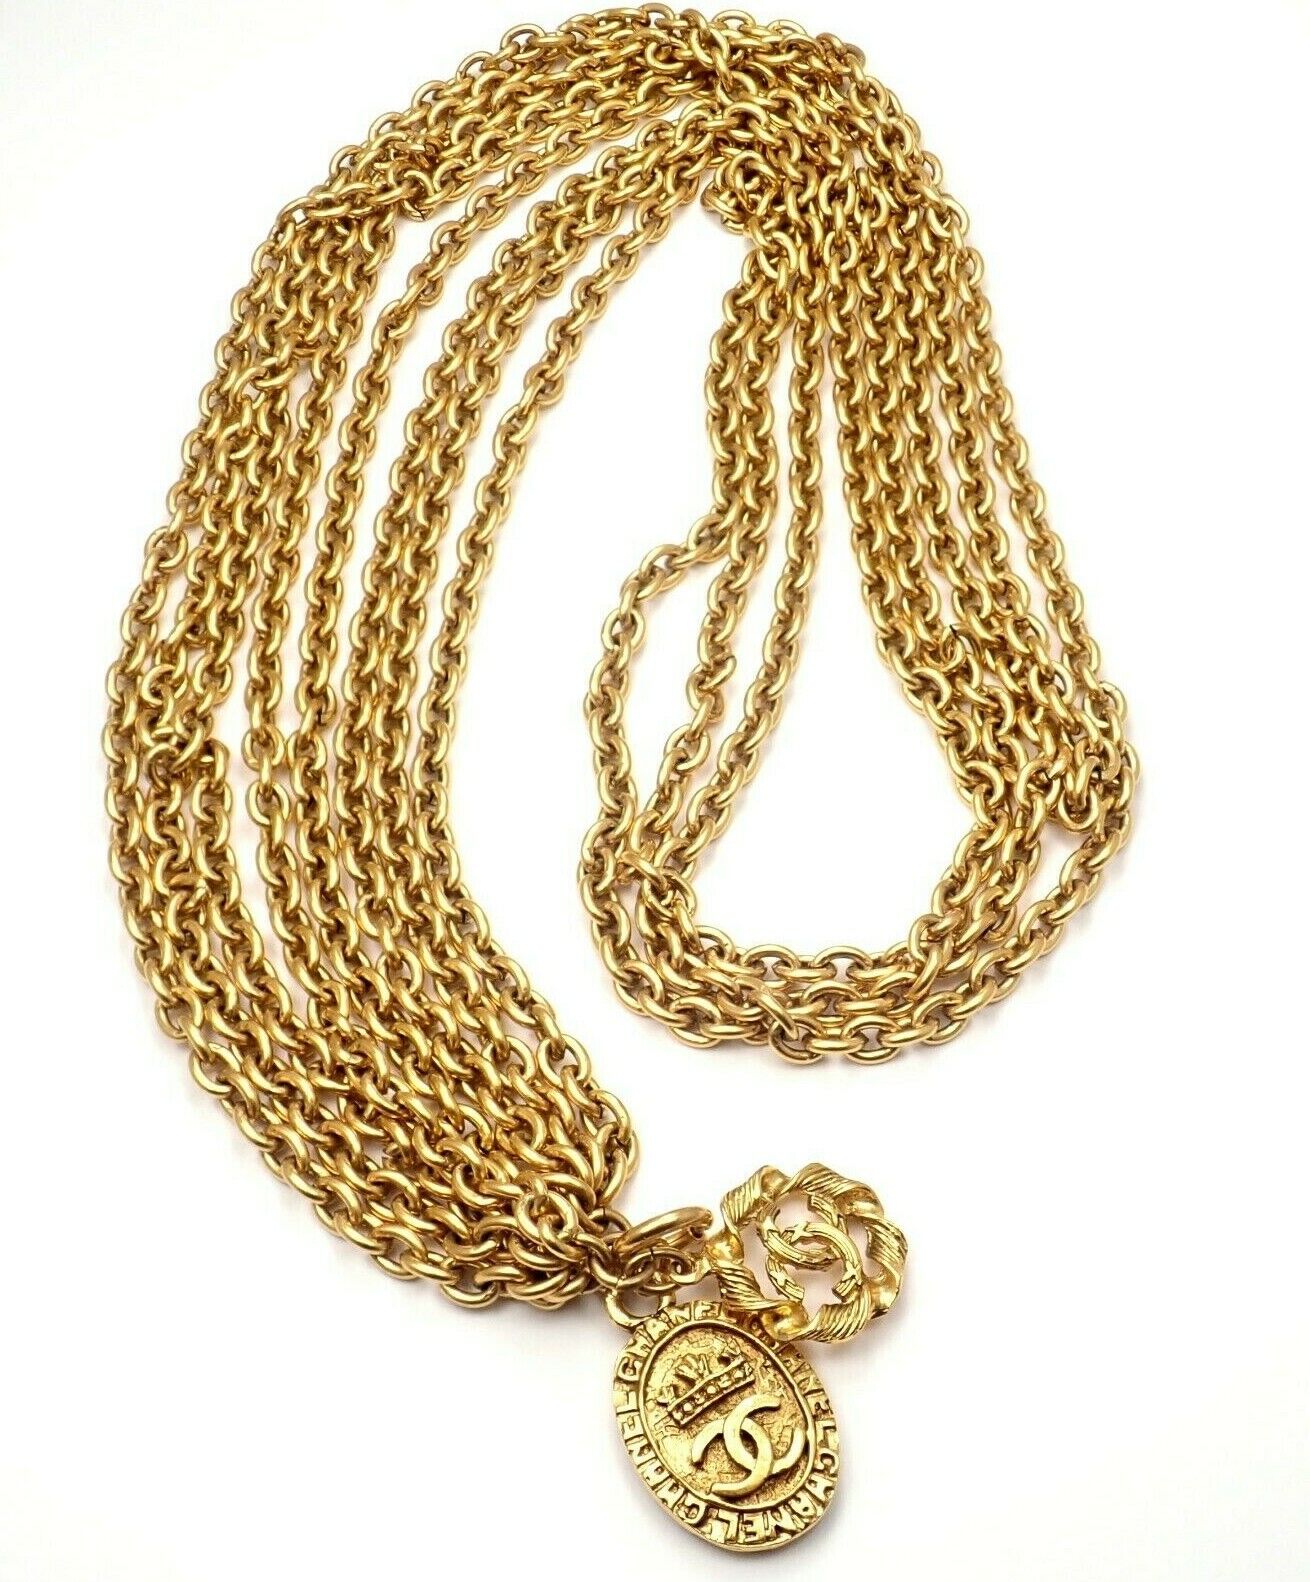 Vintage Chanel Jewelry Online  Opulent Jewelers